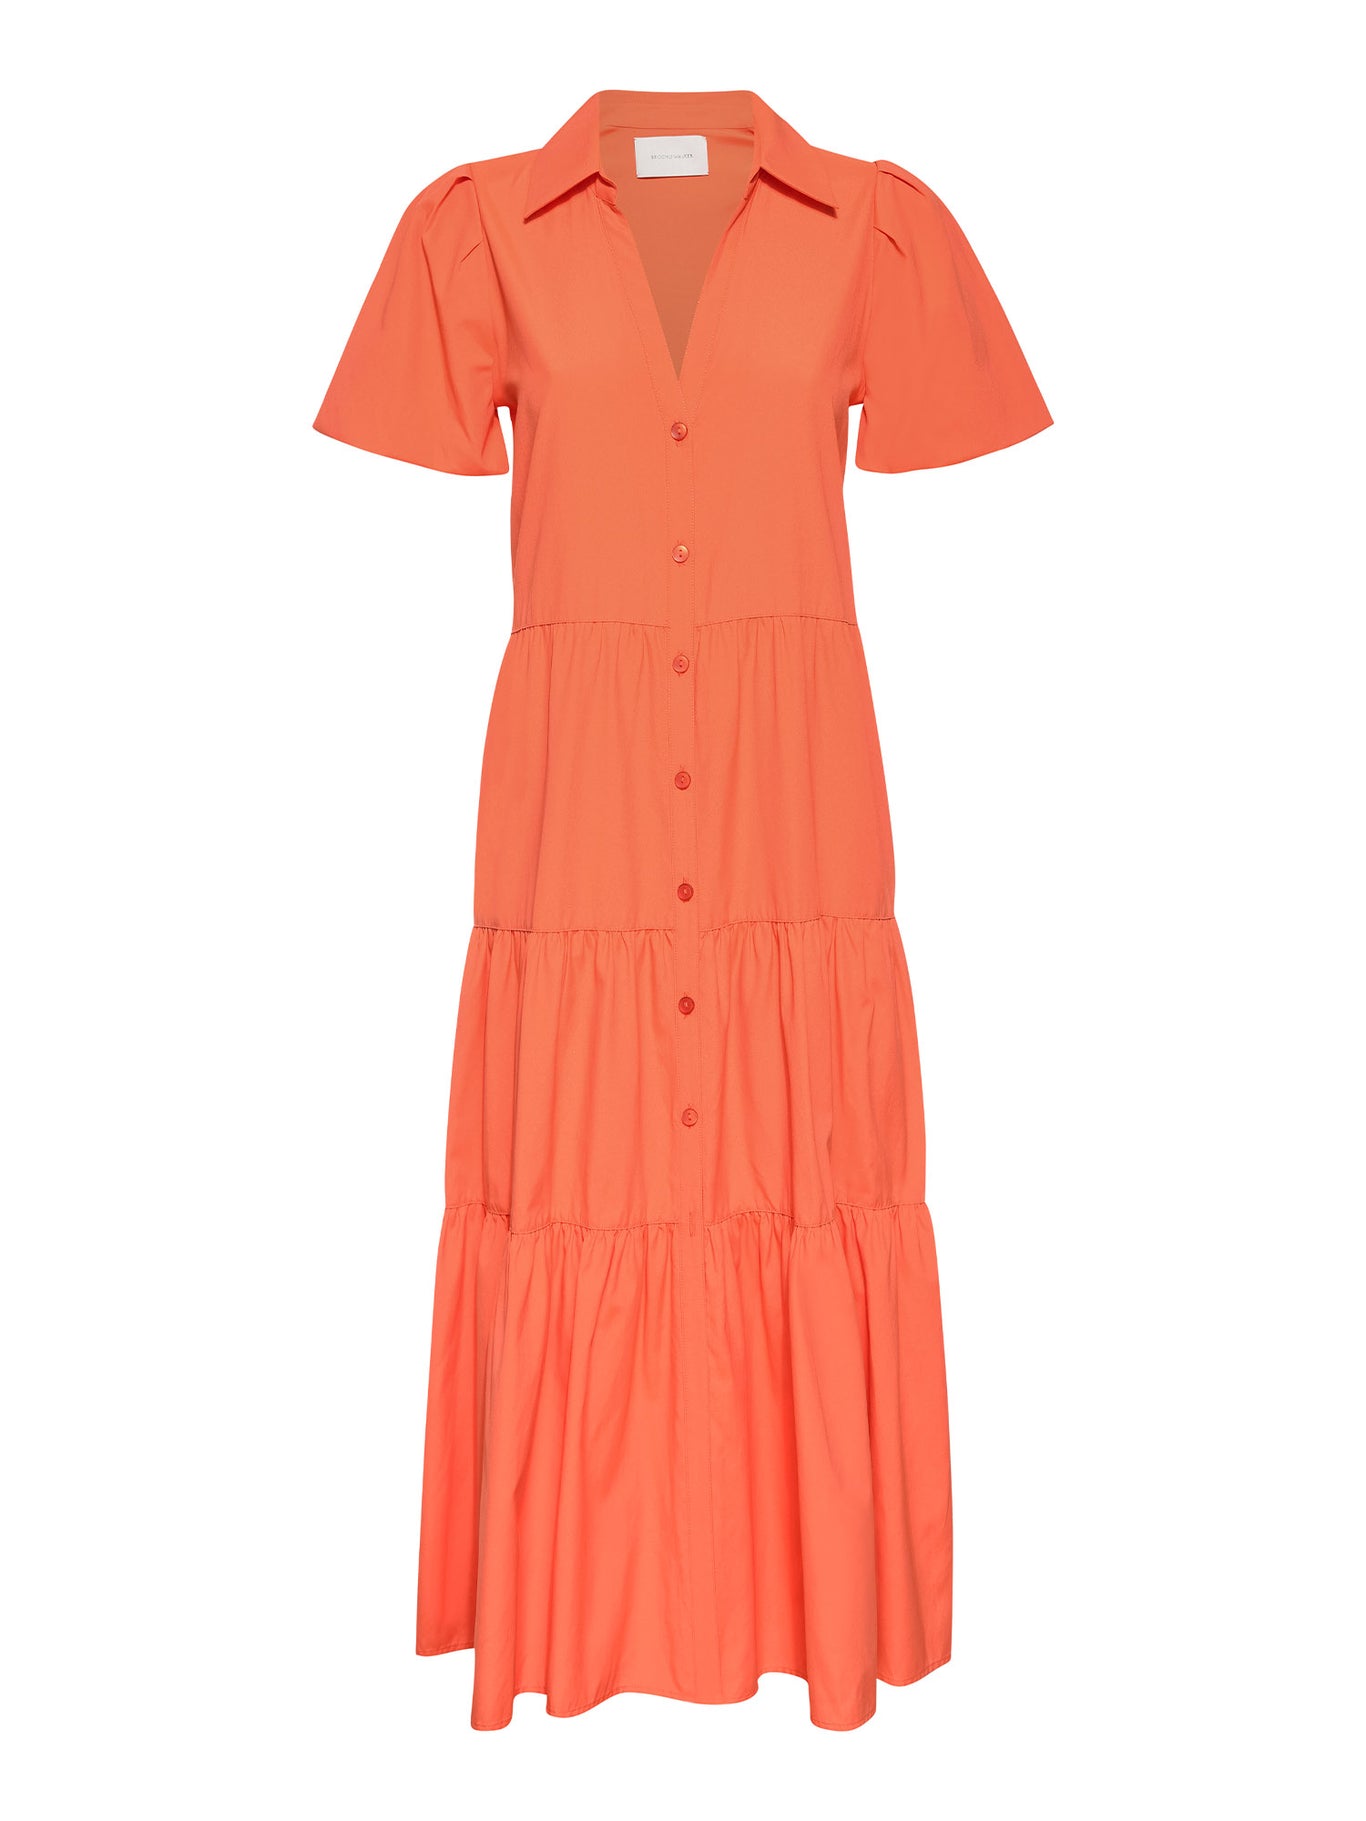 Women's Havana Dress in Tangerine